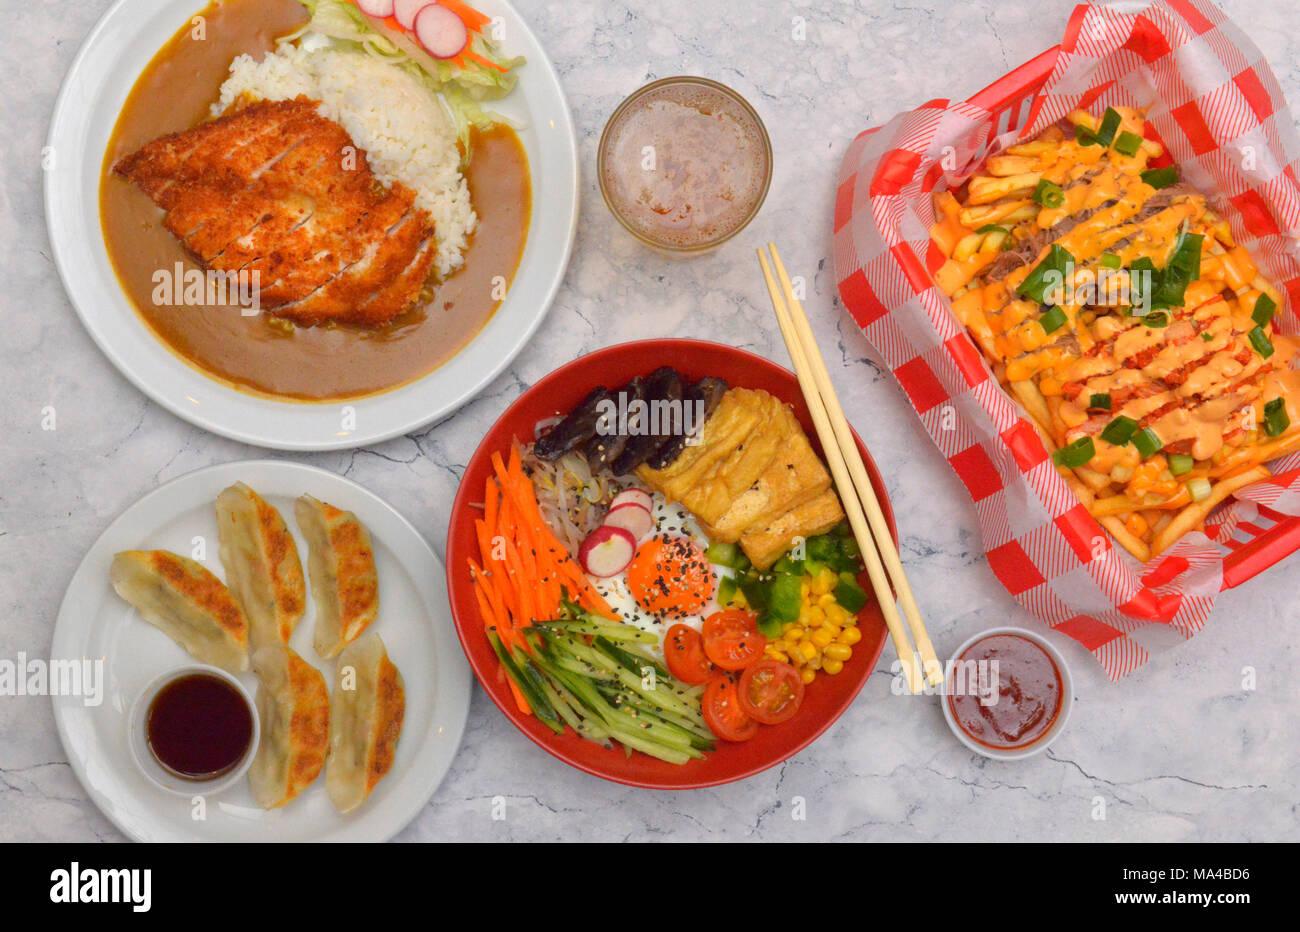 A selection of Korean food including tofu & mushroom bimbimbap, beef kimchi, chicken red curry, vegetable dumplings, crispy panko chicken katsu curry. Stock Photo